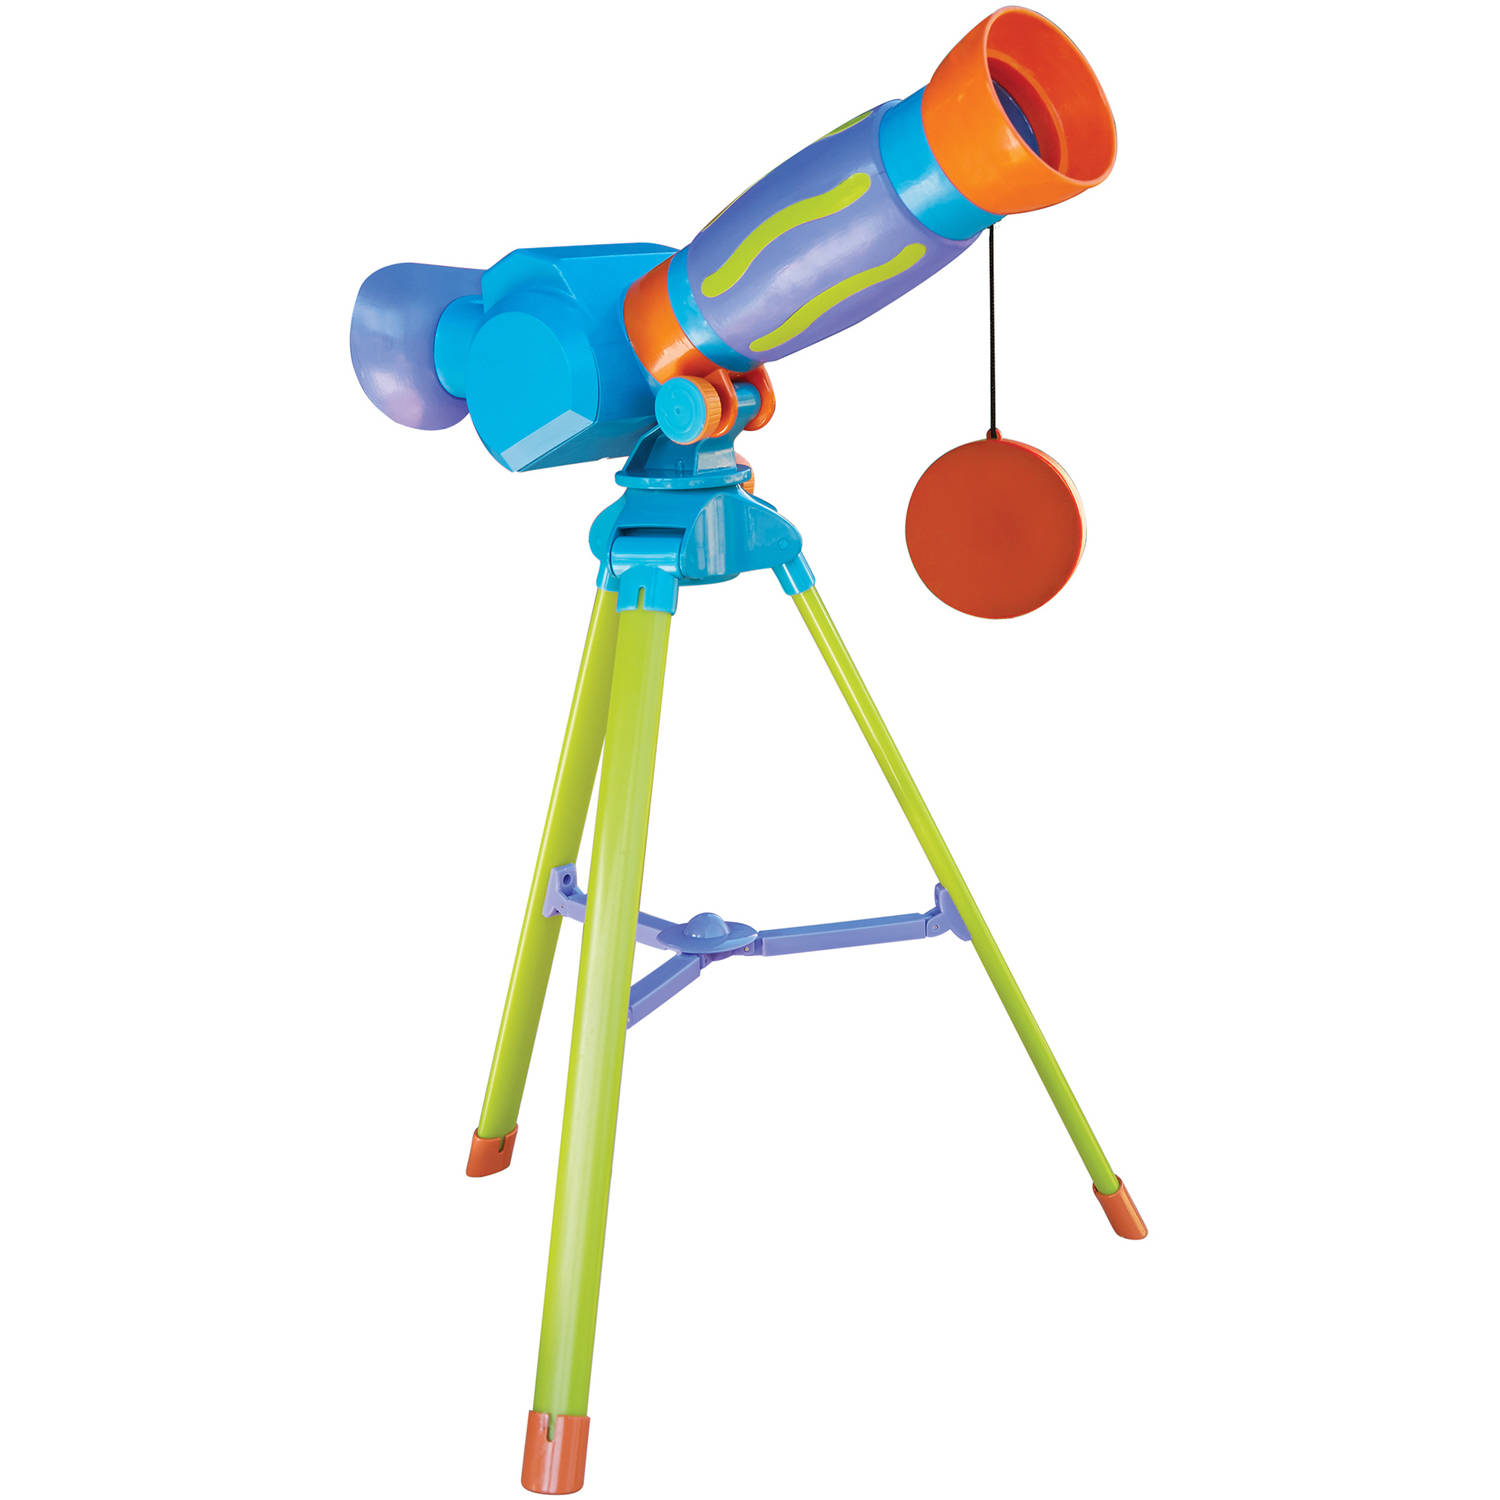 EI-5109 - Geosafari Jr My First Telescope by Educational Insights - image 1 of 6